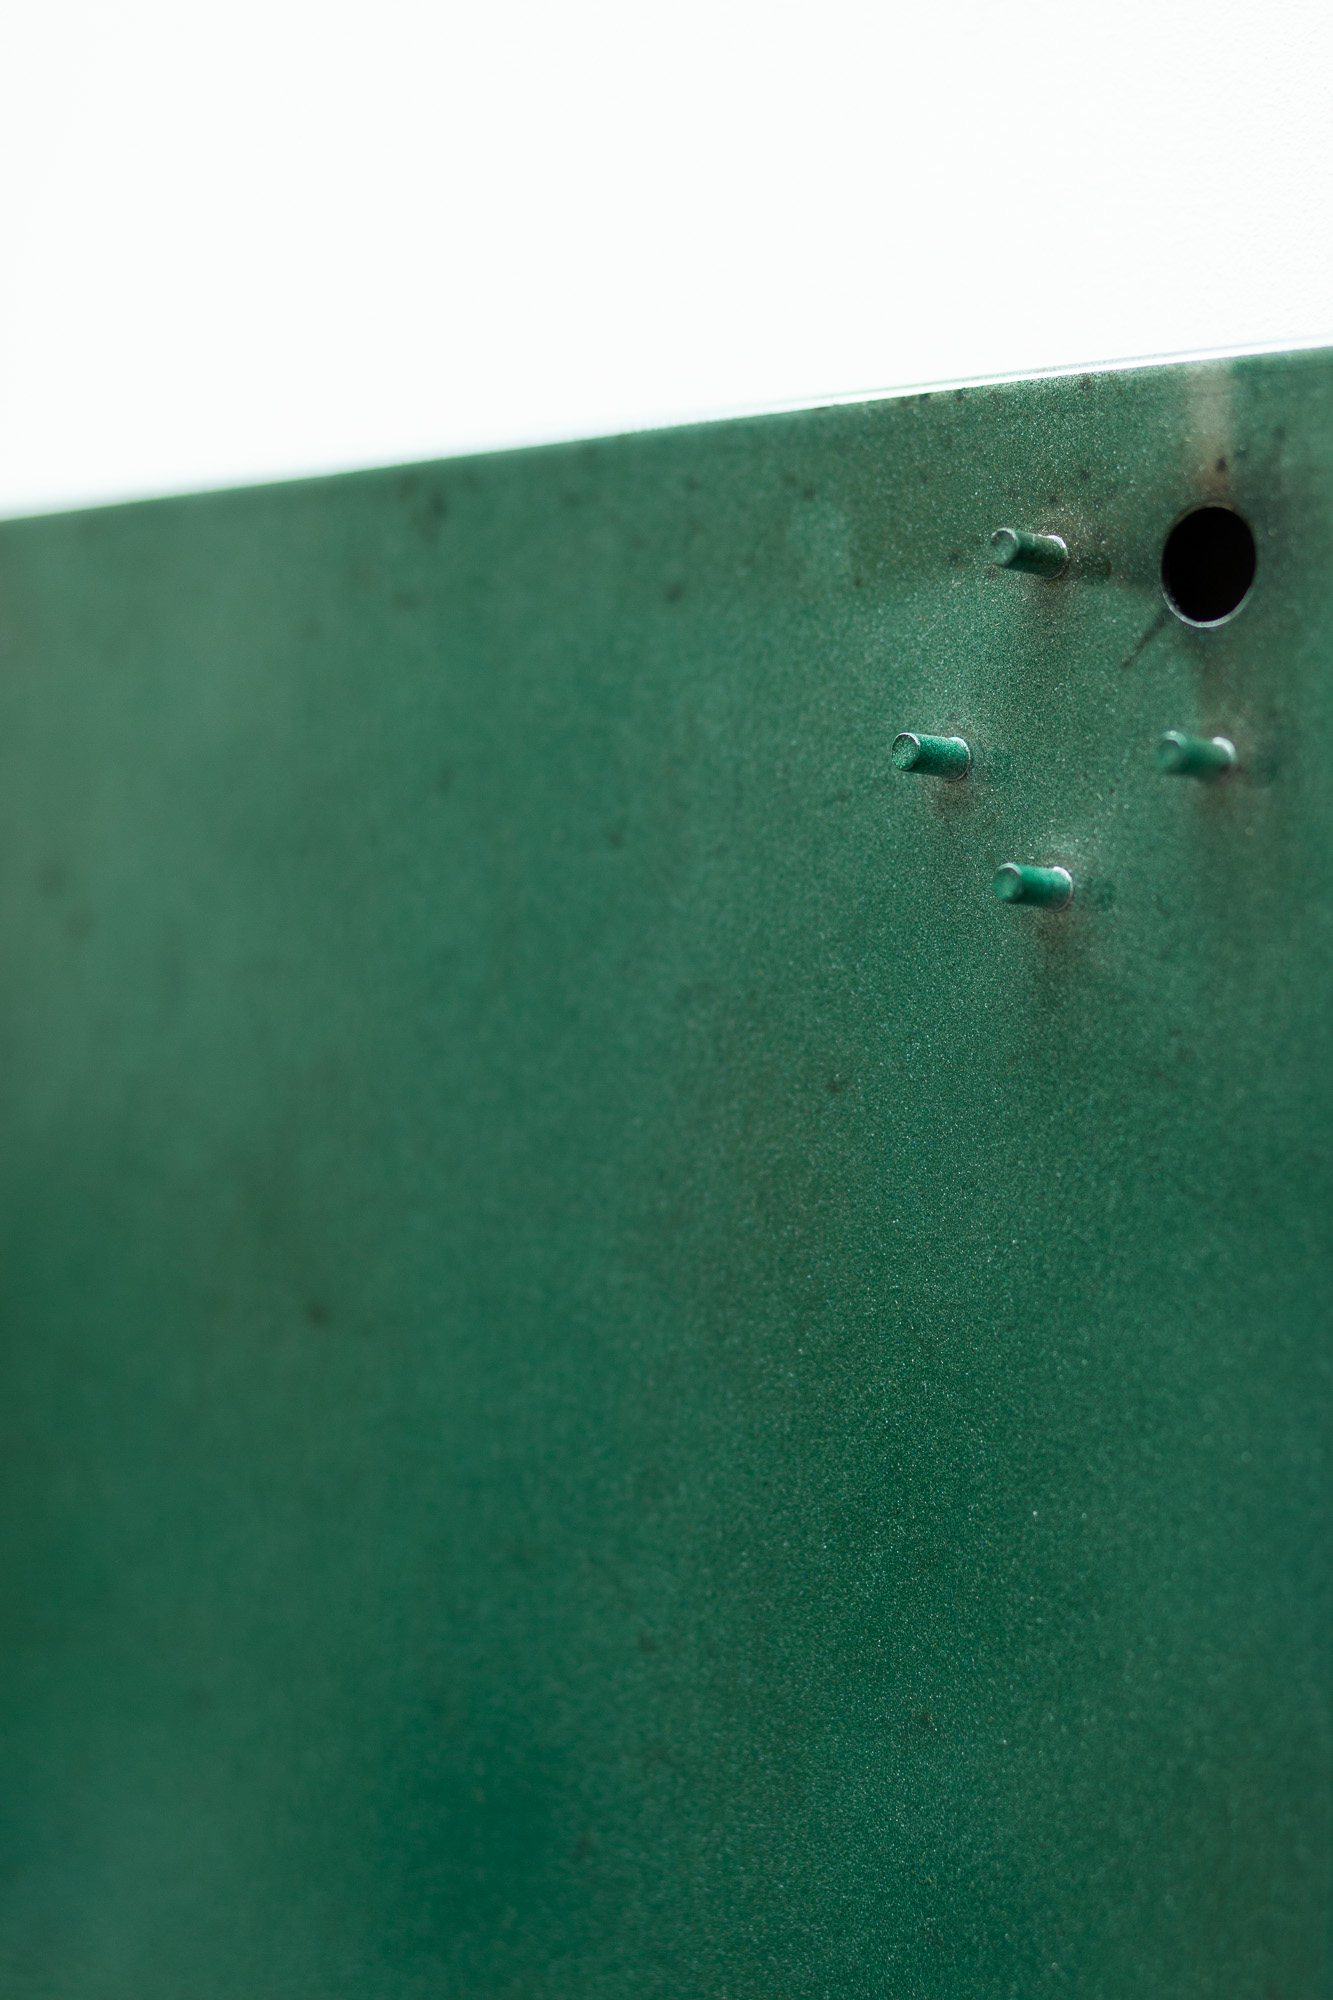 Greenie. Powder coating and redundant mild steel fabricators jig. 41cm x 36cm x 4cm. 2022. Photo by John-Paul Brown